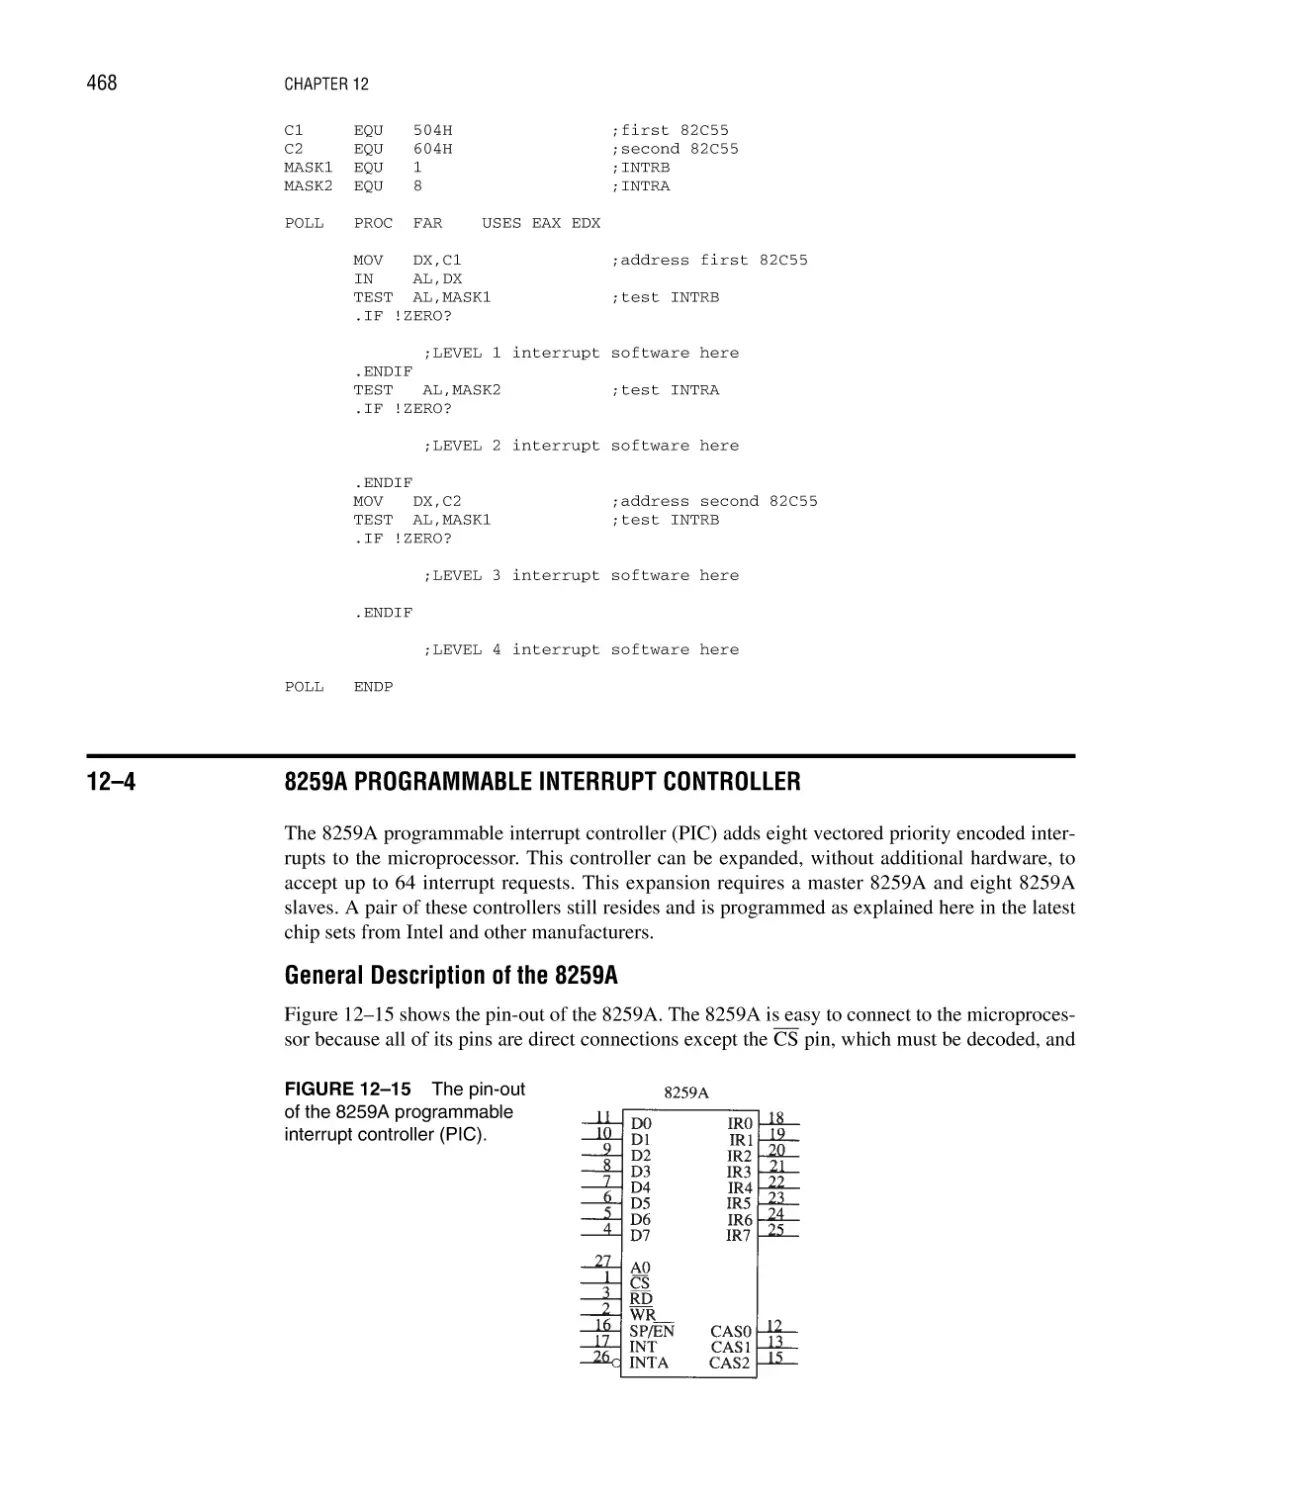 12–4 8259A Programmable Interrupt Controller
General Description of the 8259A